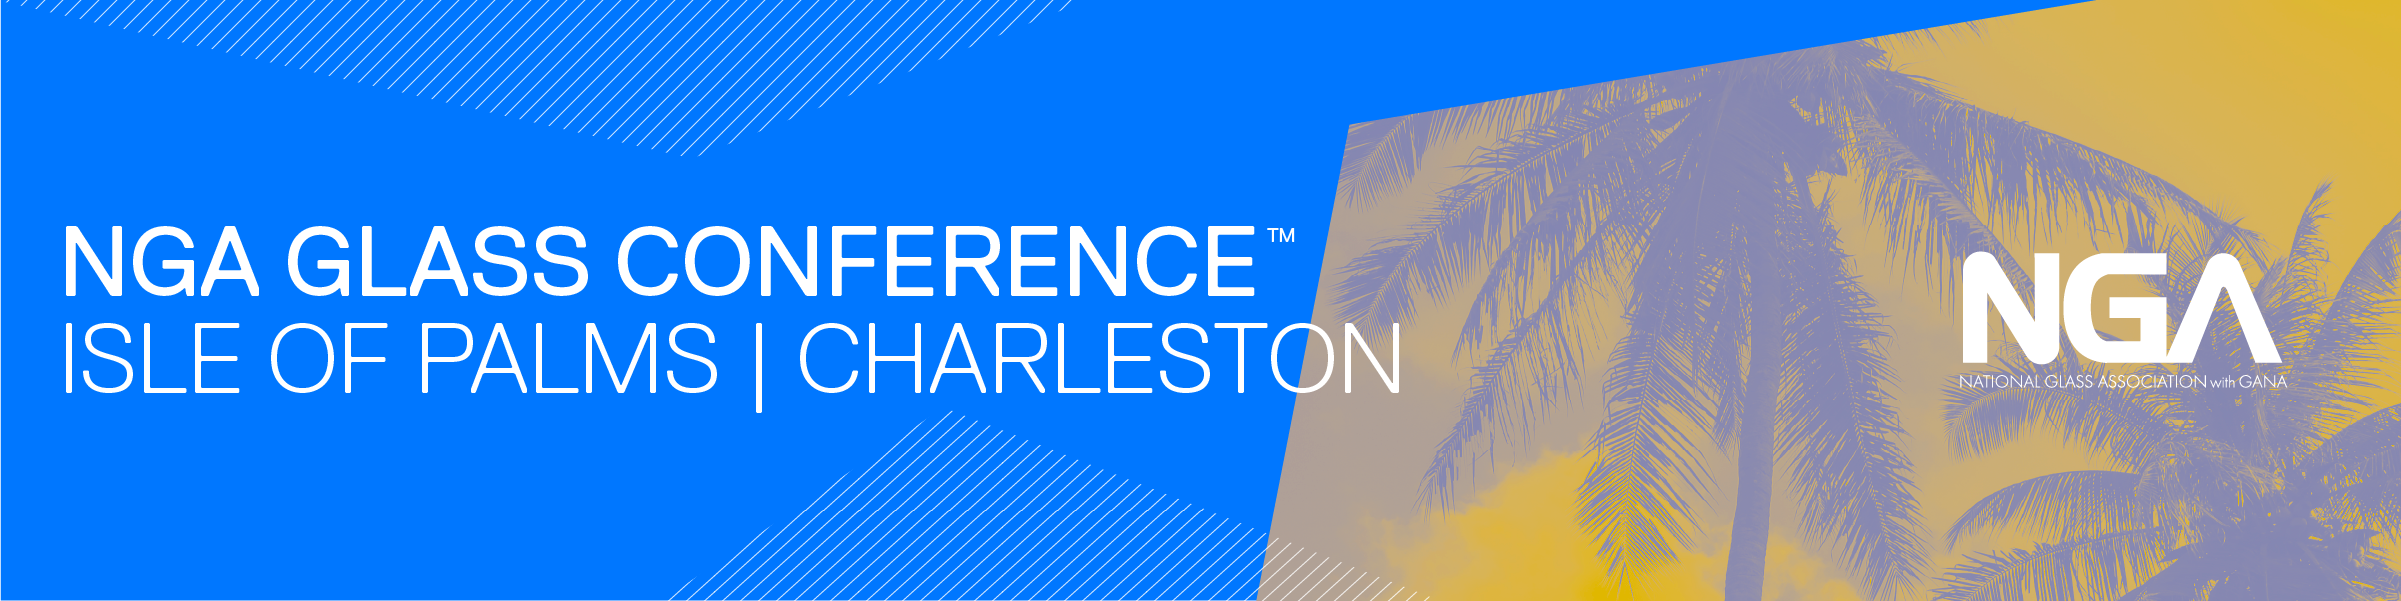 NGA Glass Conference Isle of Palms | Charleston